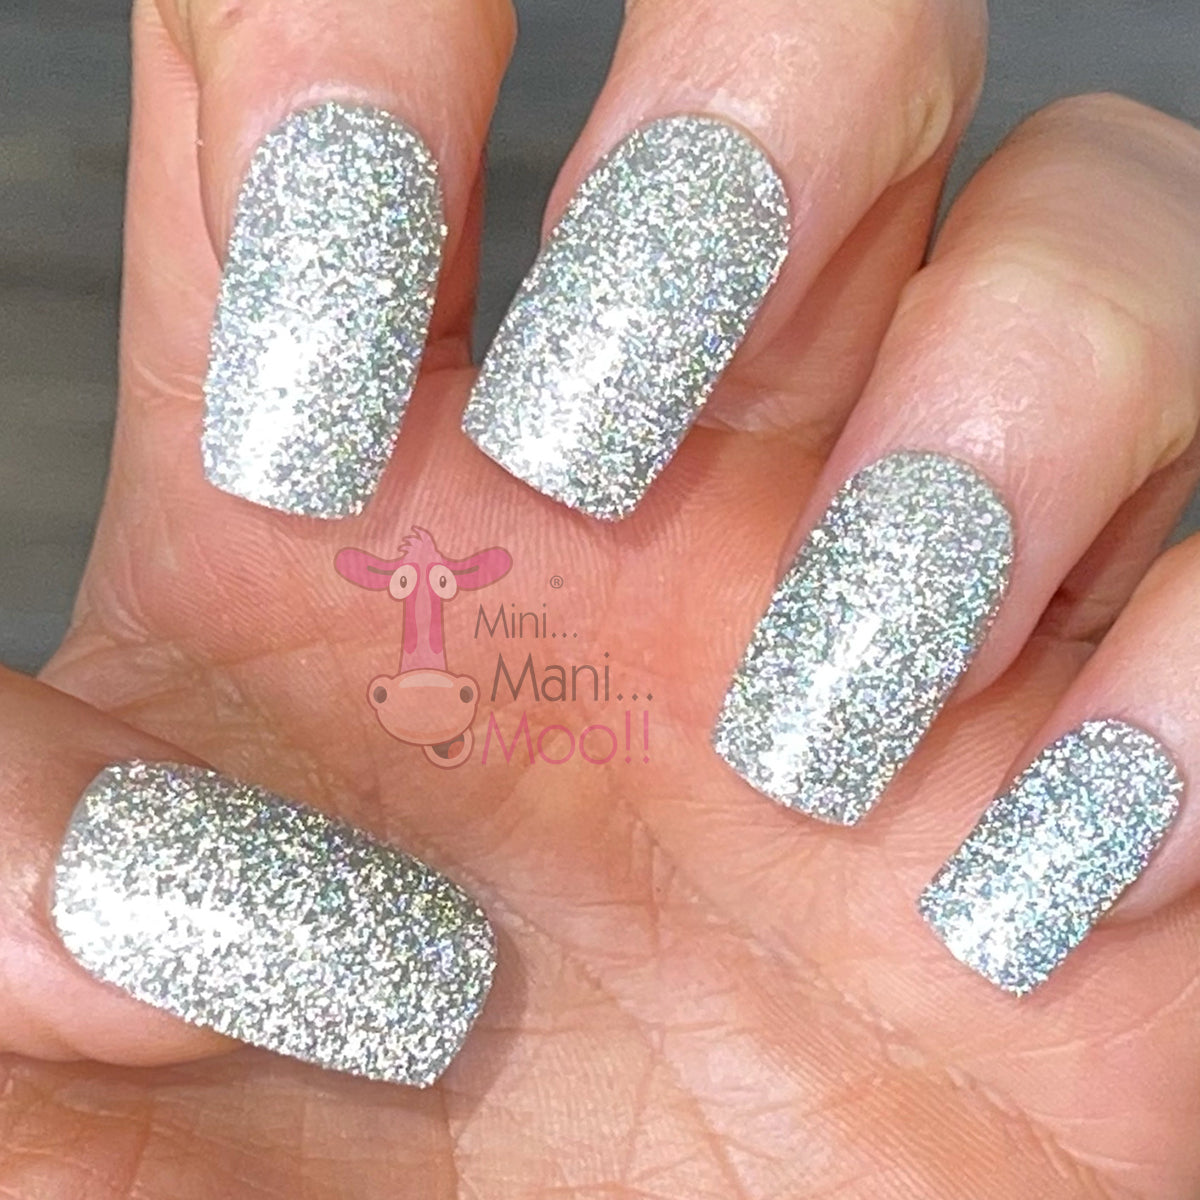 Moolala™ Diamond Luxury Gel Polish - D01 Silver